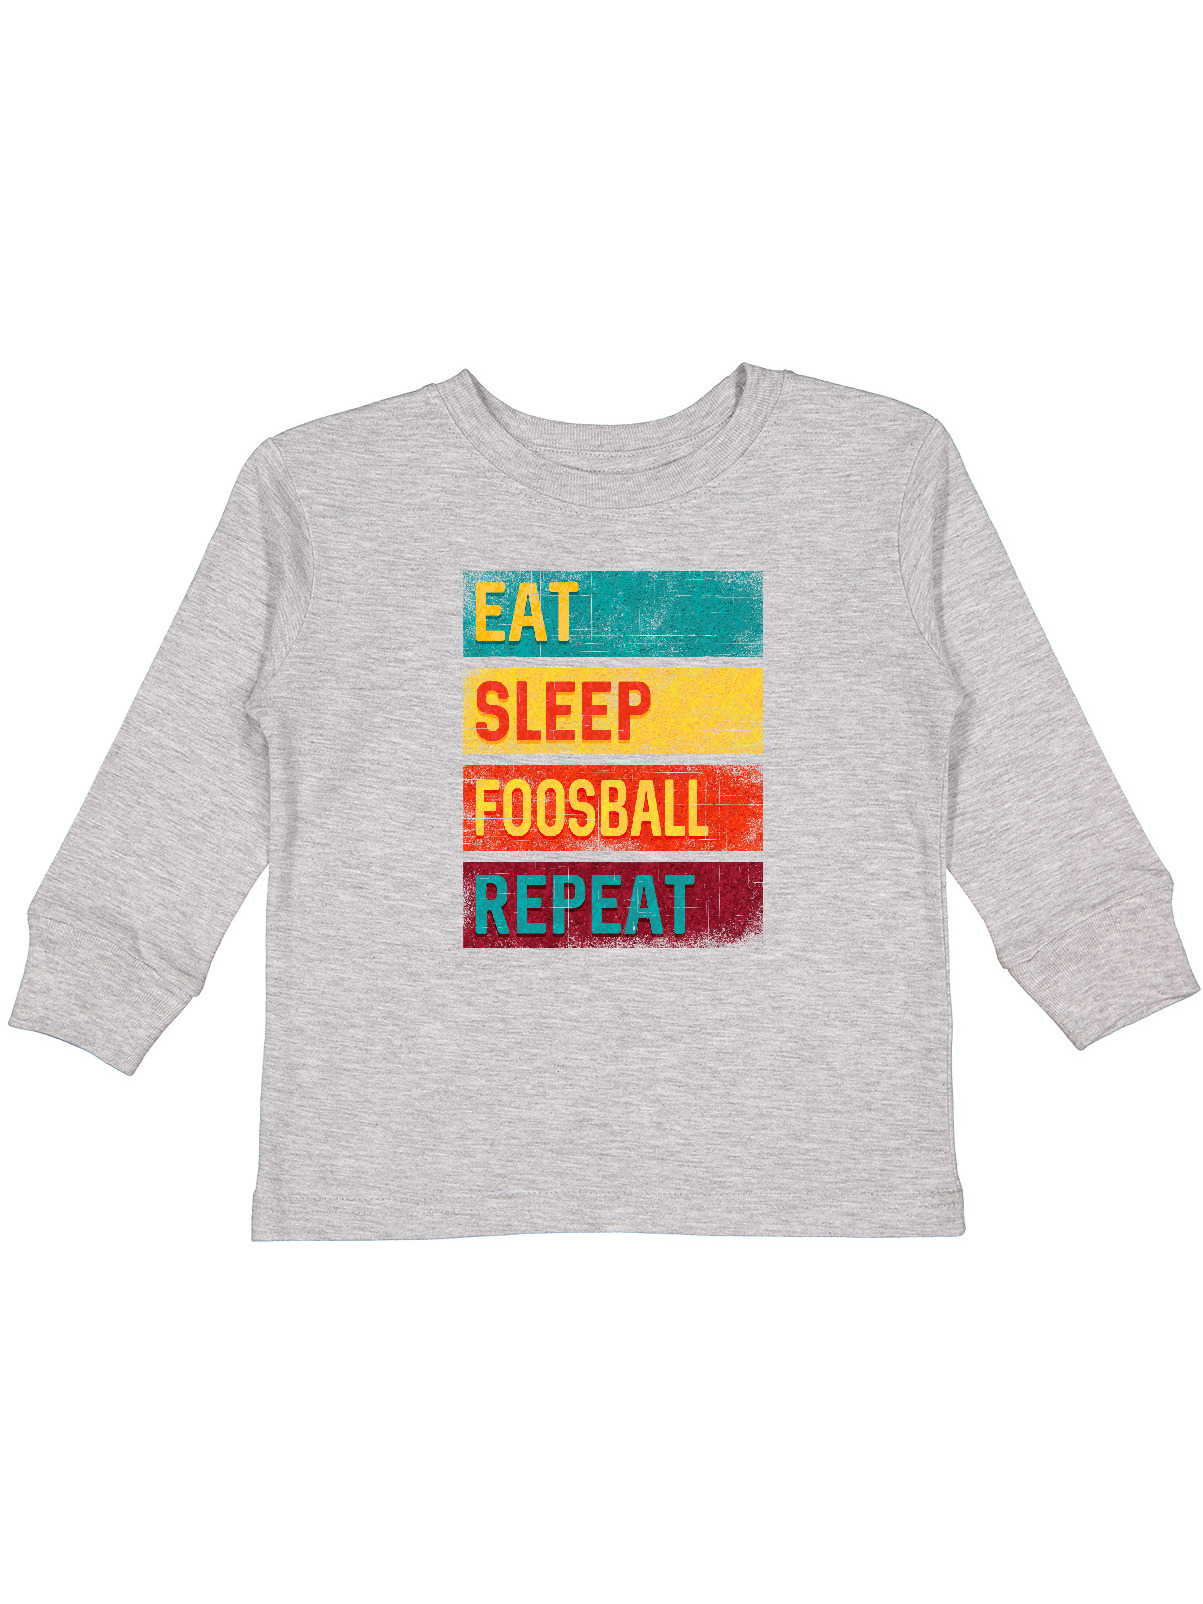 Inktastic Foosball Funny Eat Sleep Foosball Repeat Quote Boys or Girls Long Sleeve Toddler T-Shirt - image 1 of 4